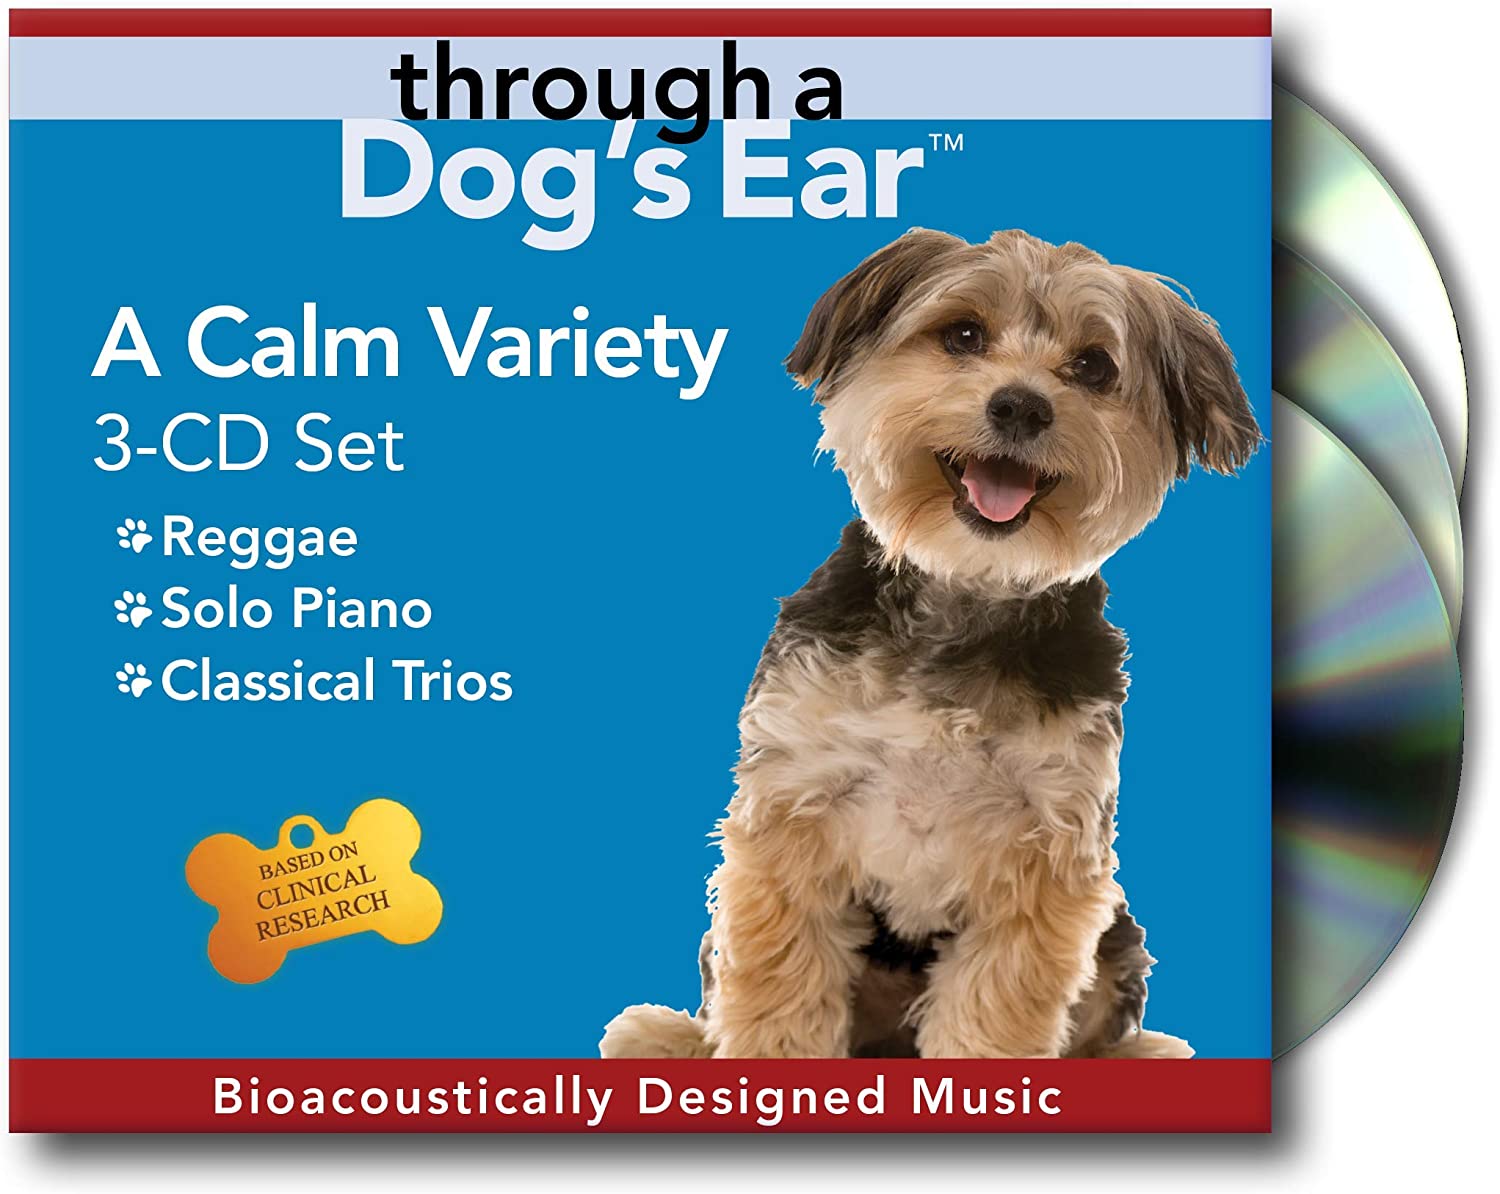 Through a Dog’s Ear: 3-CD Set, A Calm Variety